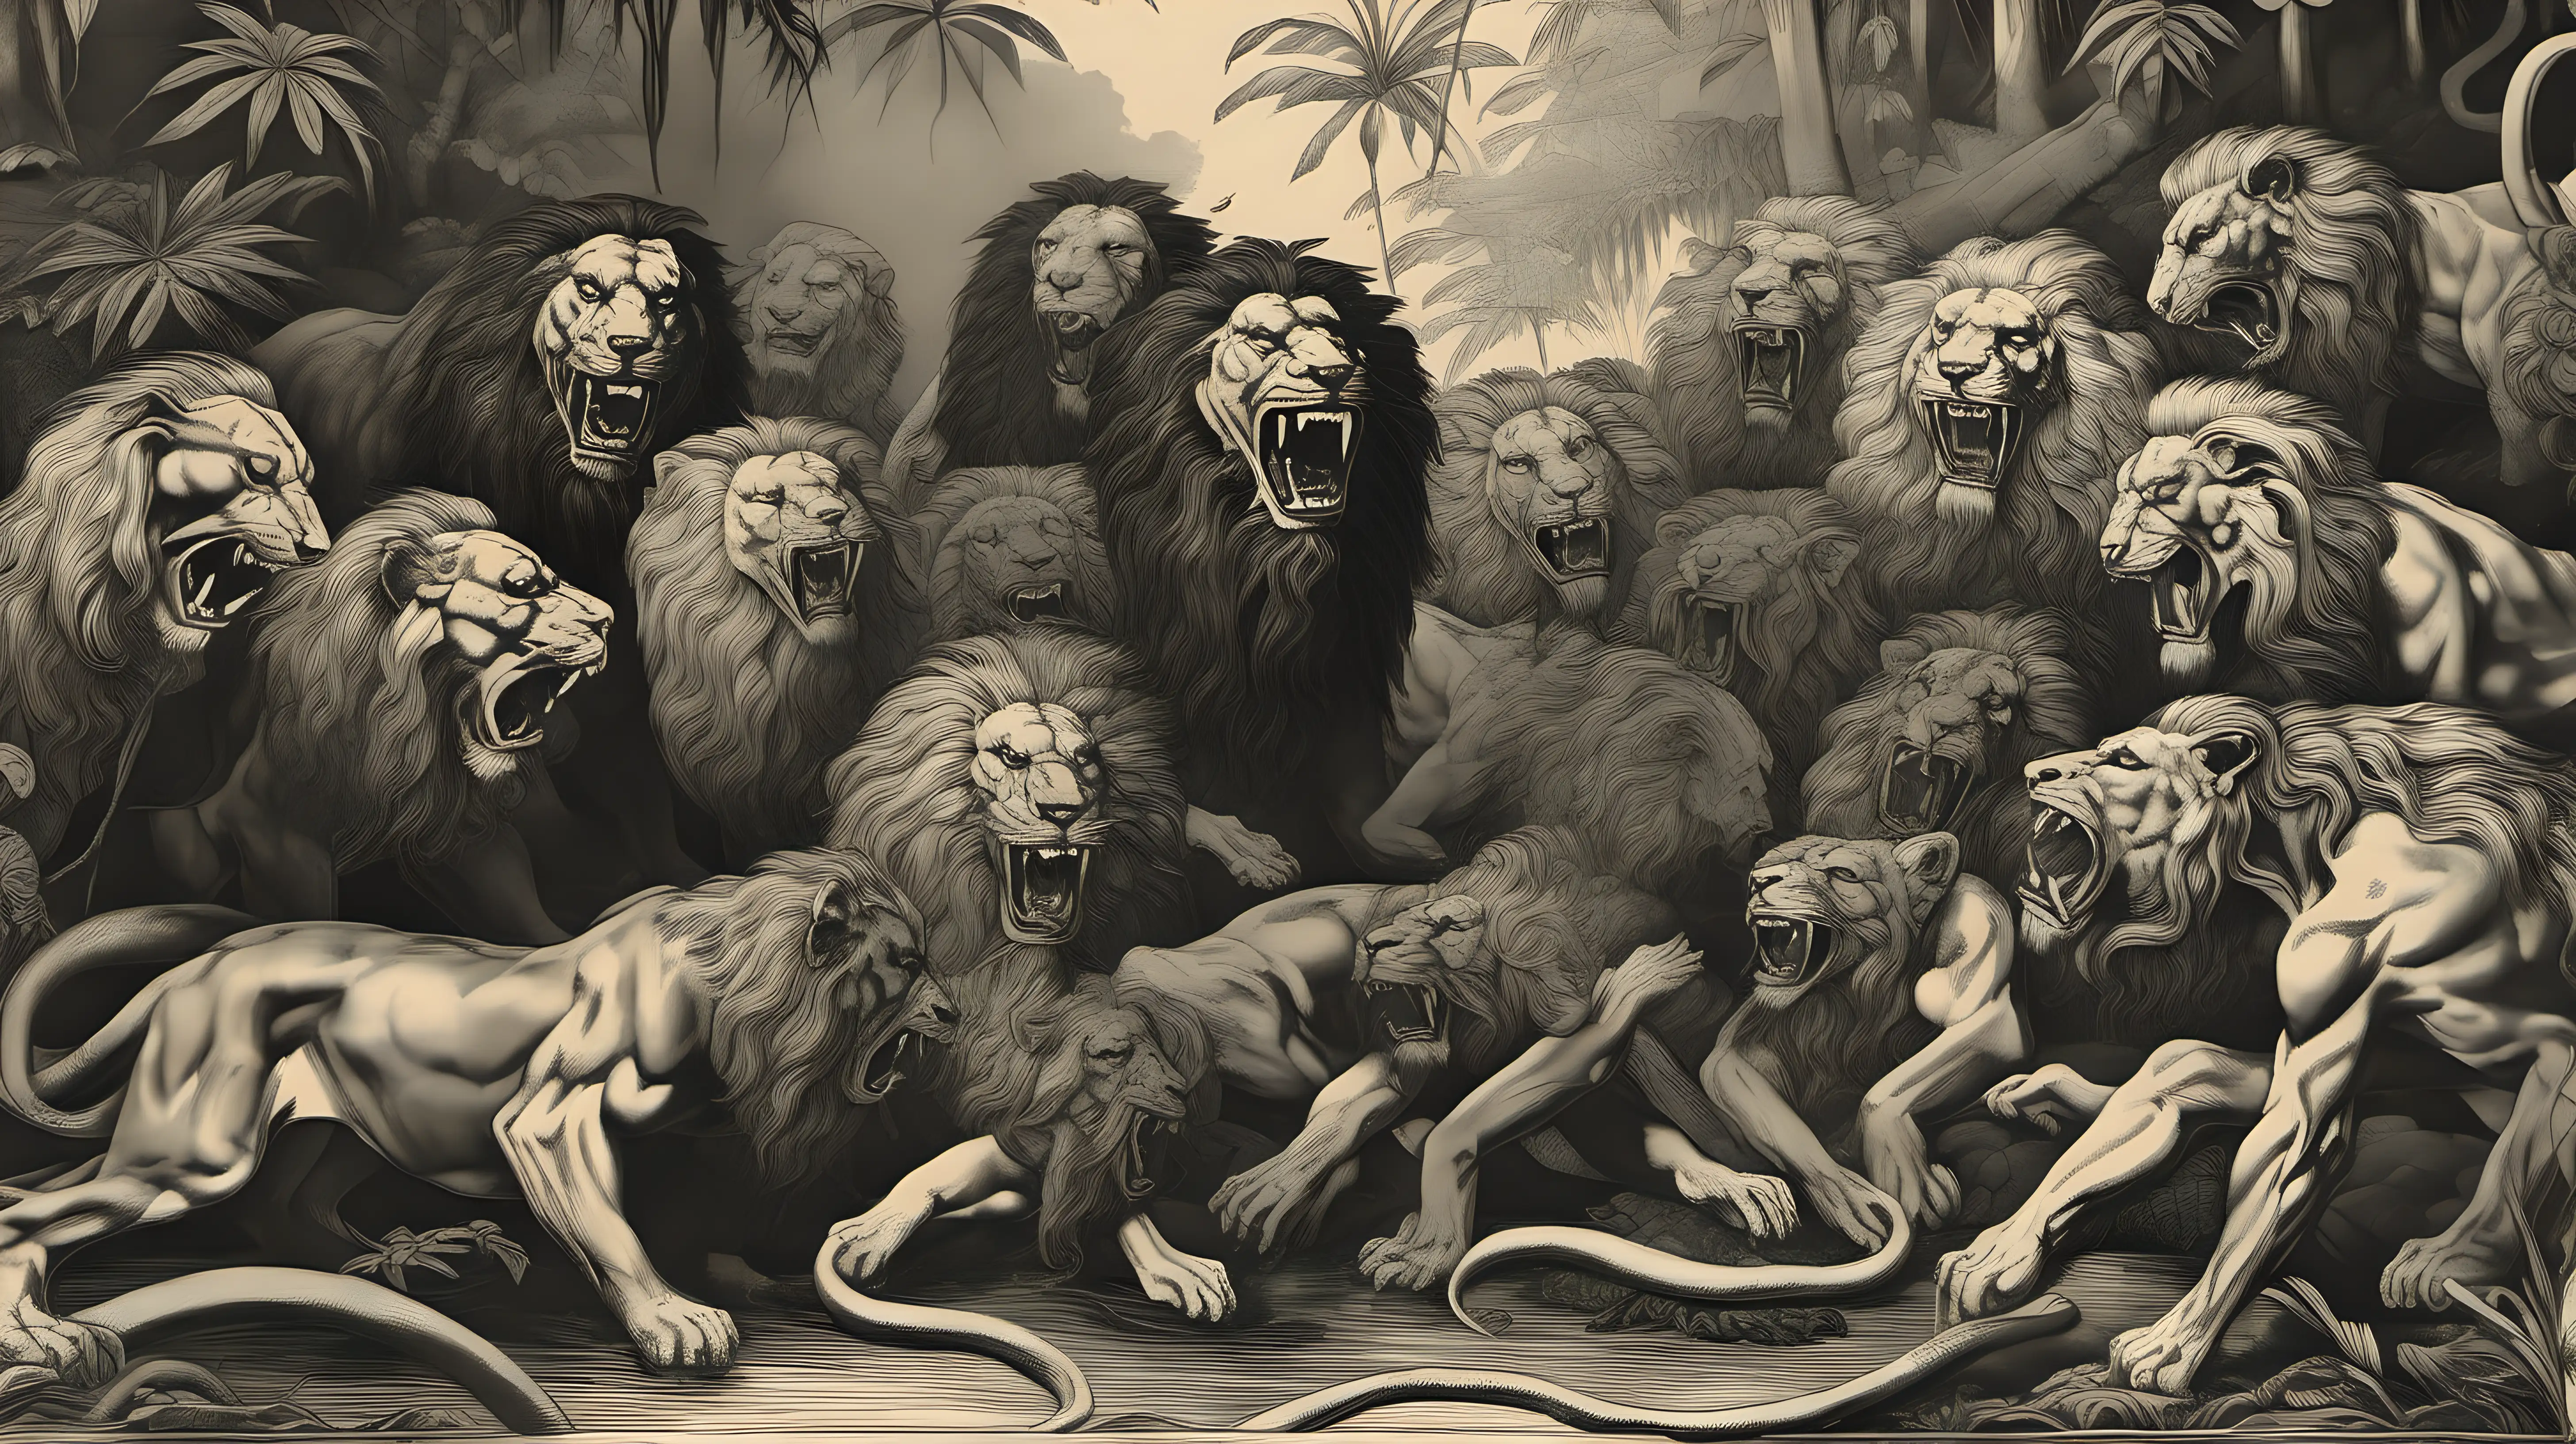 16th Century Men and Roaring Lions in Amazon Jungle Rainstorm